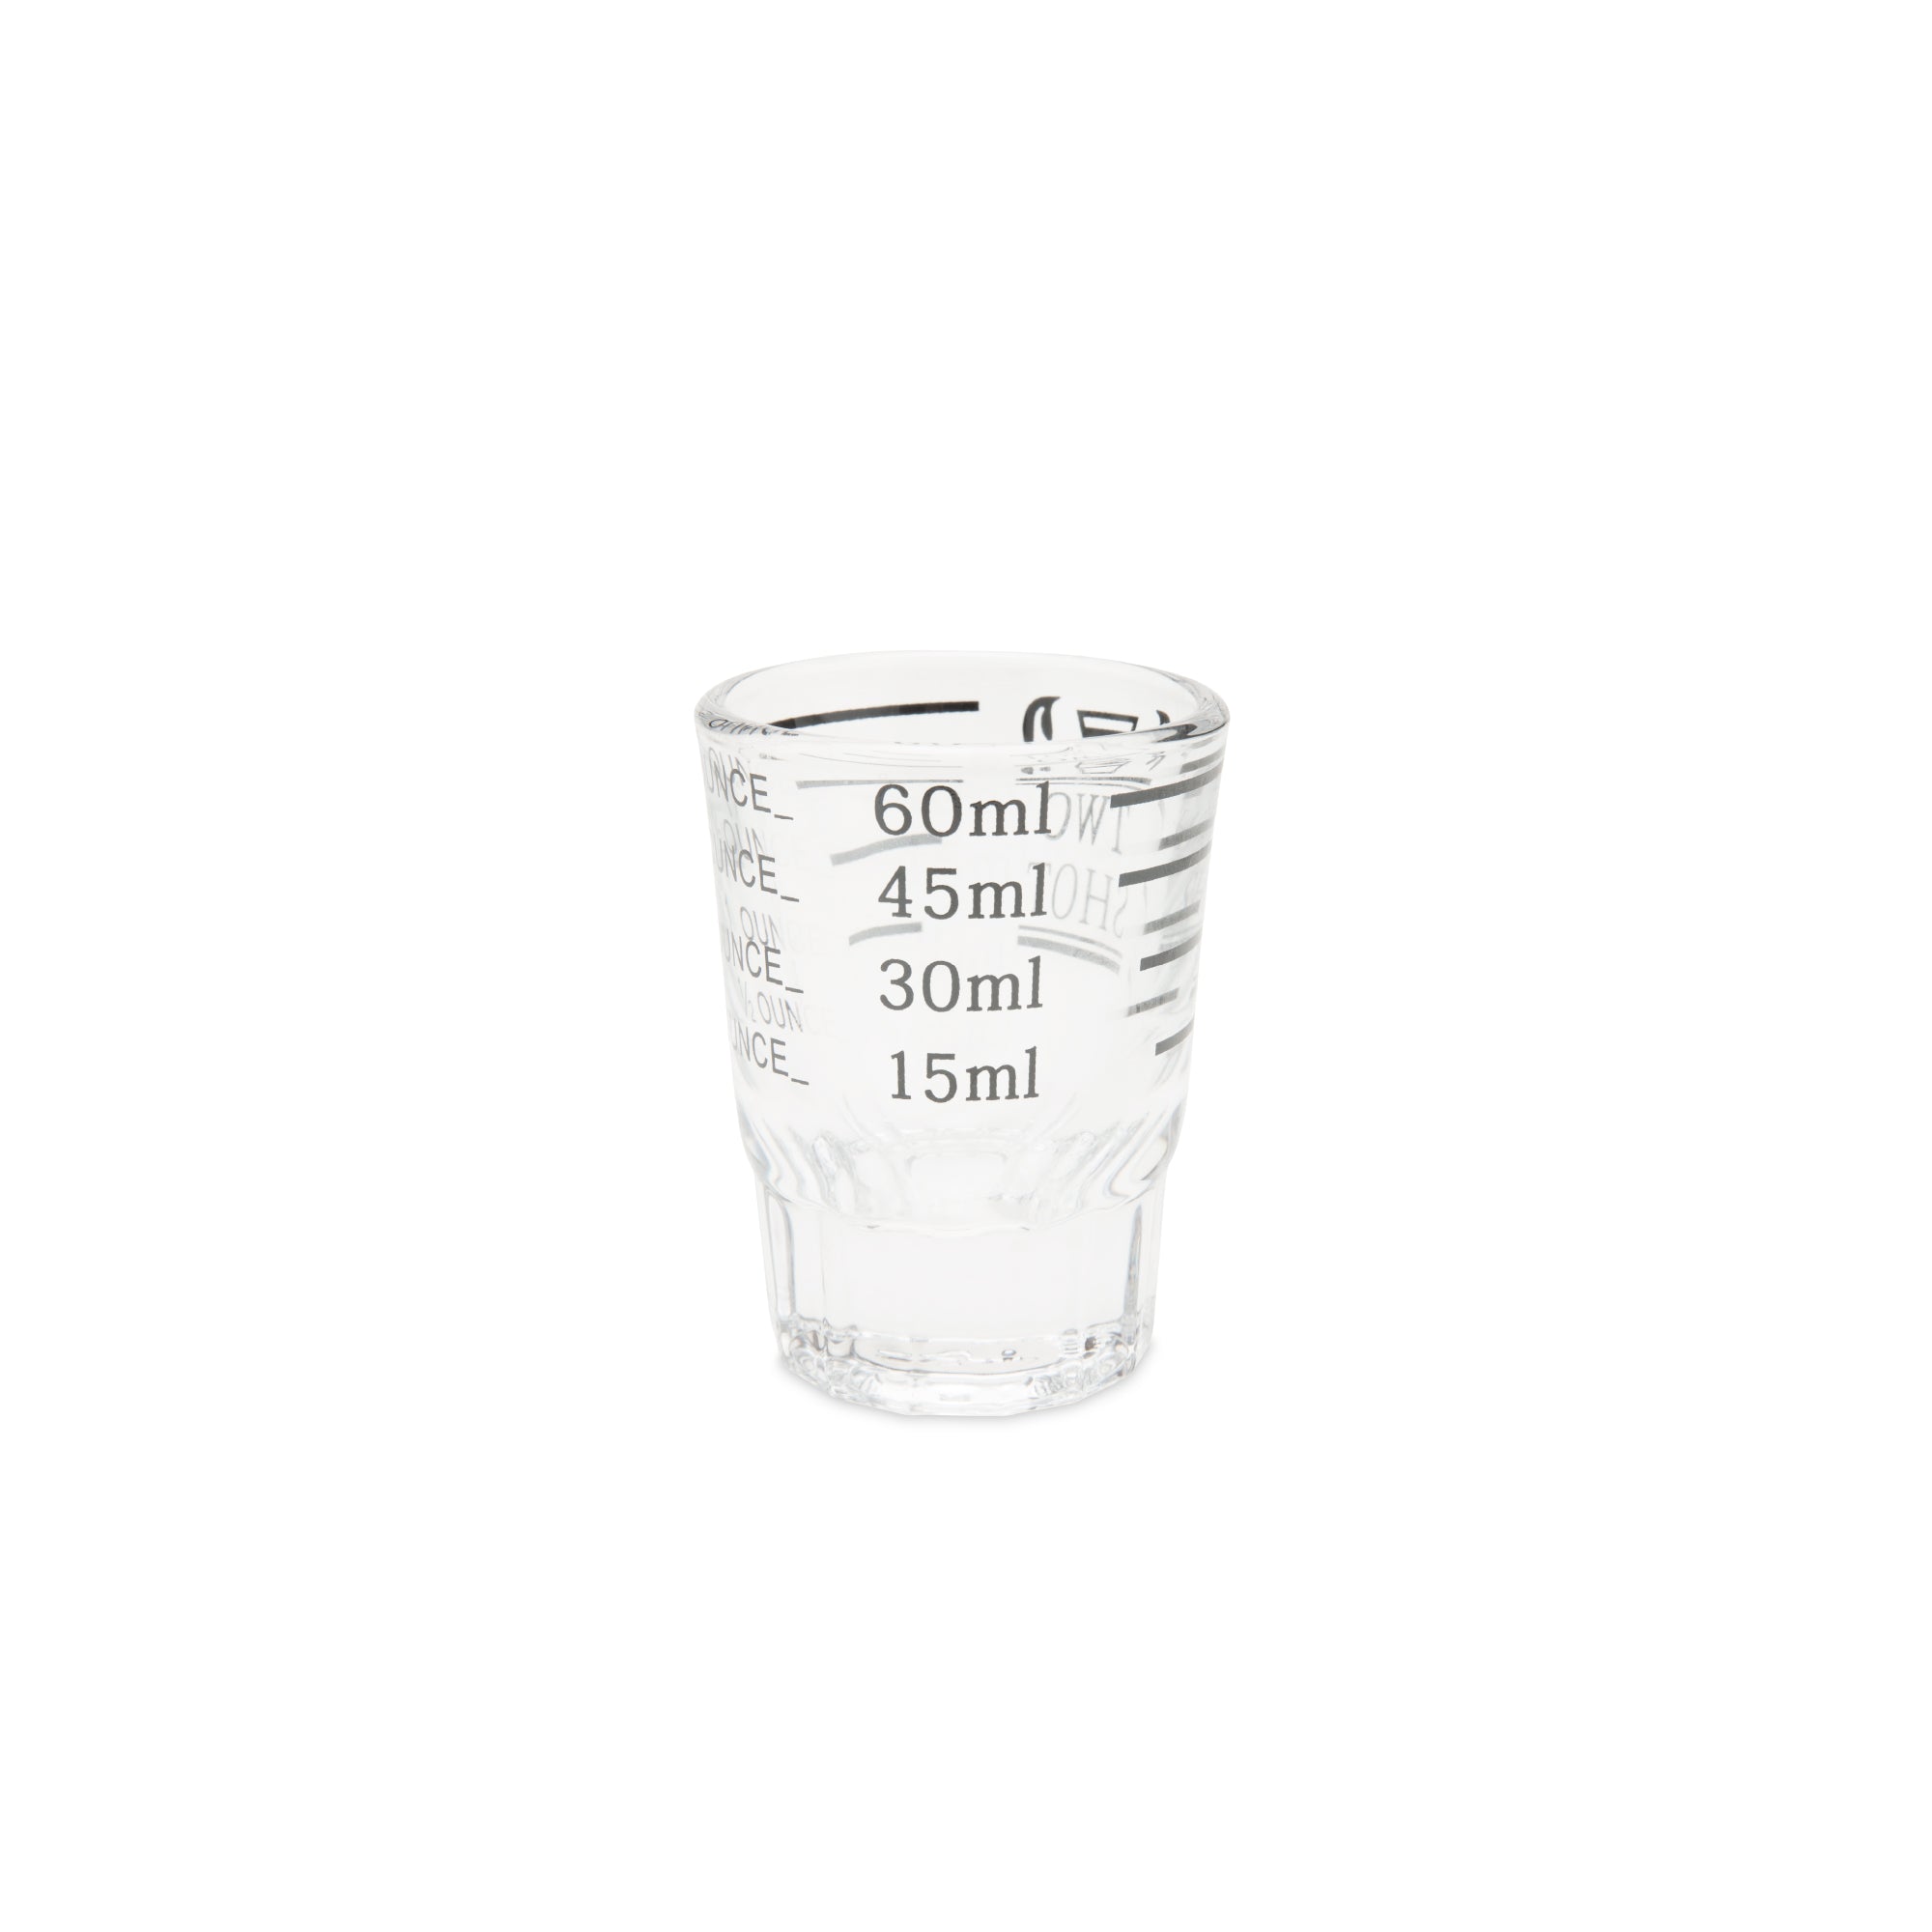 30ml glass measuring cup espresso shot